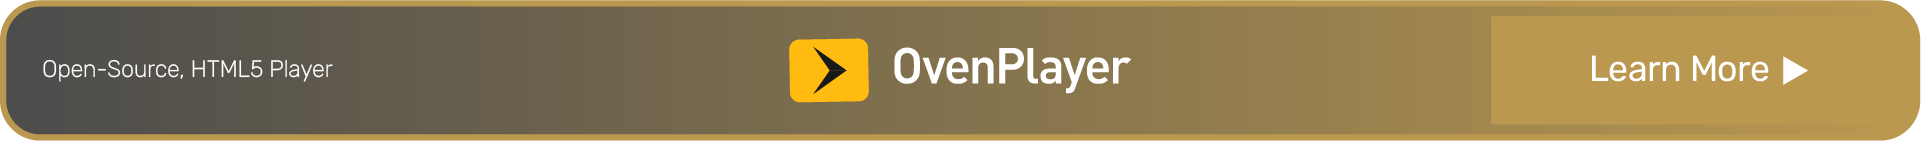 OvenPlayer